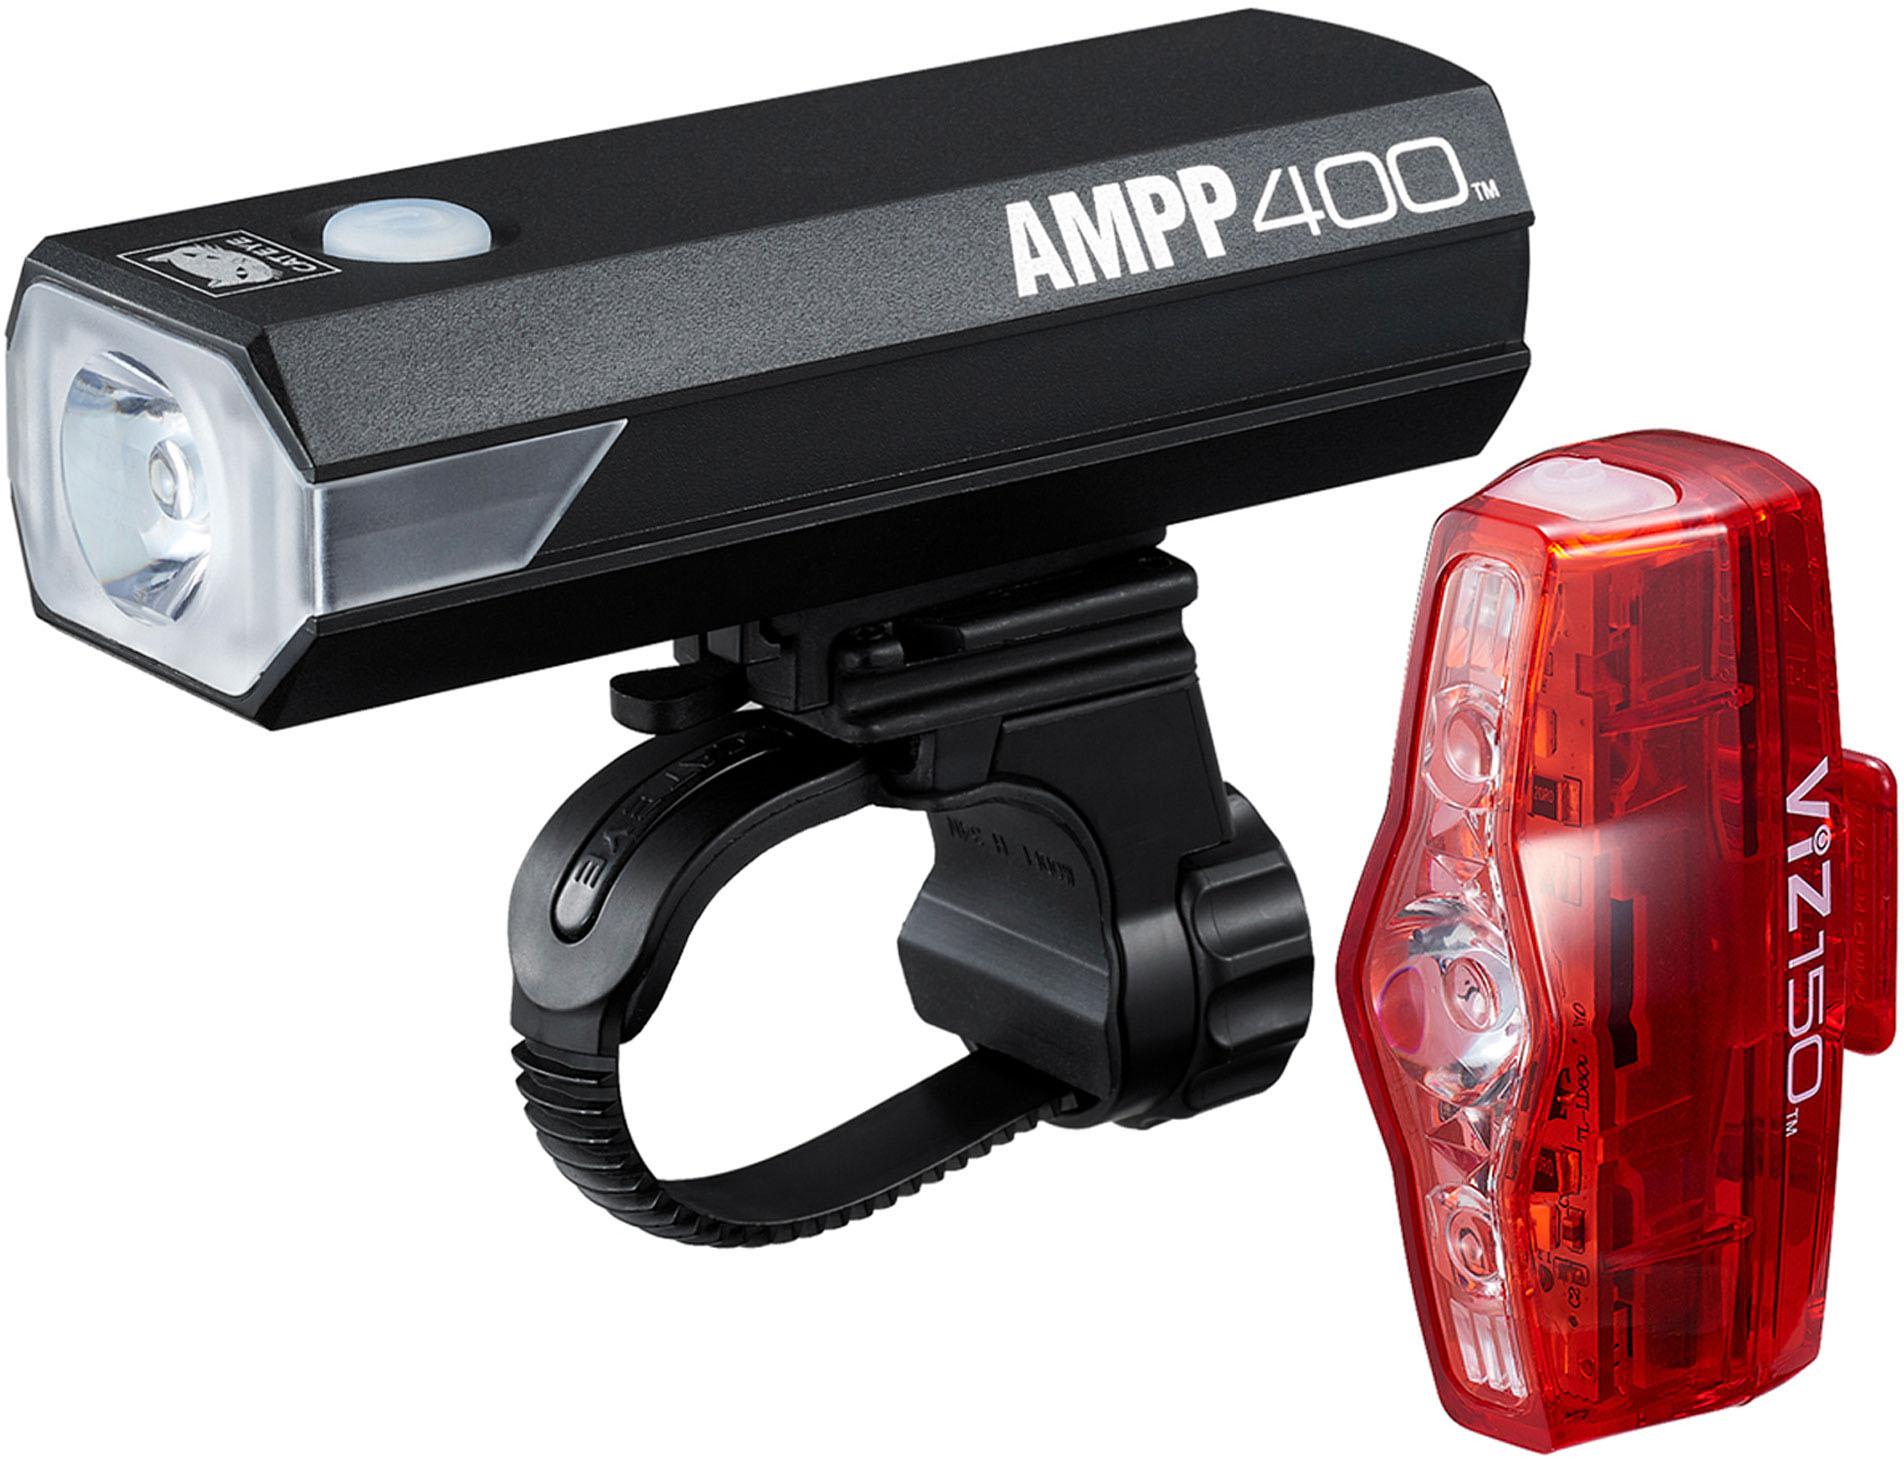 Cateye Ampp 400 And Viz 150 Light Set - Black/red